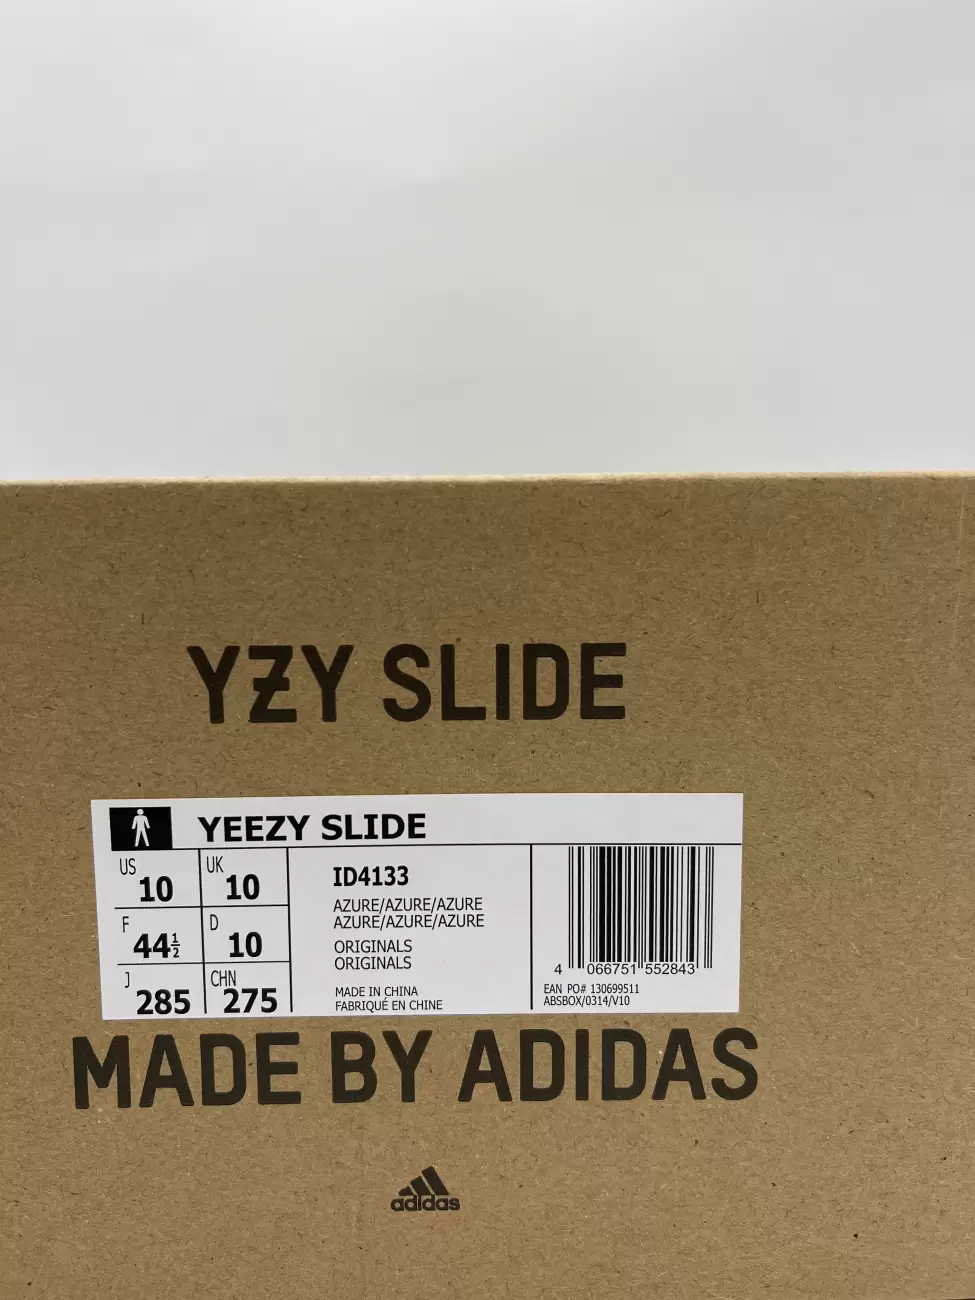 31516 - Adidas Yeezy Slide Azure | Item Details - AfterMarket